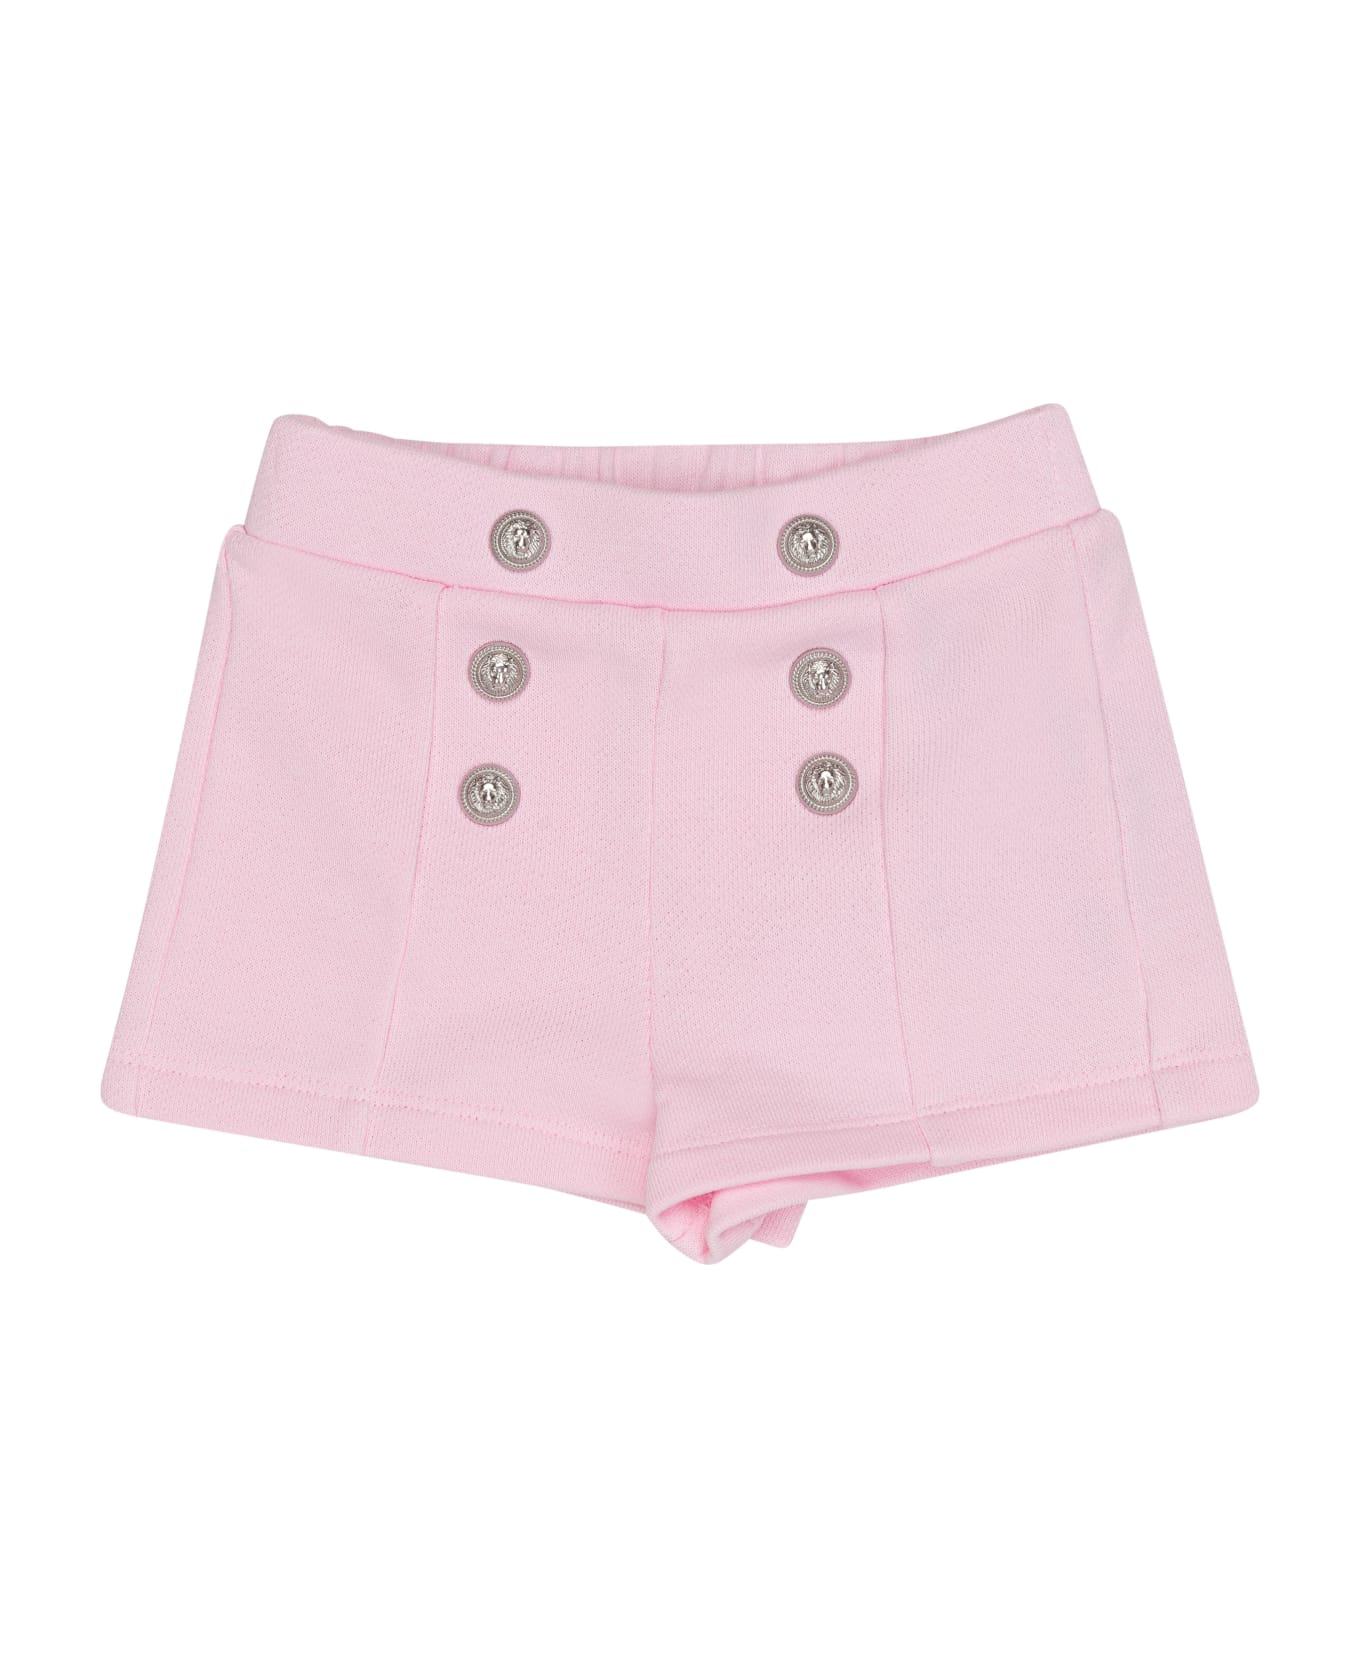 Balmain zip Shorts Neonato - Lilla